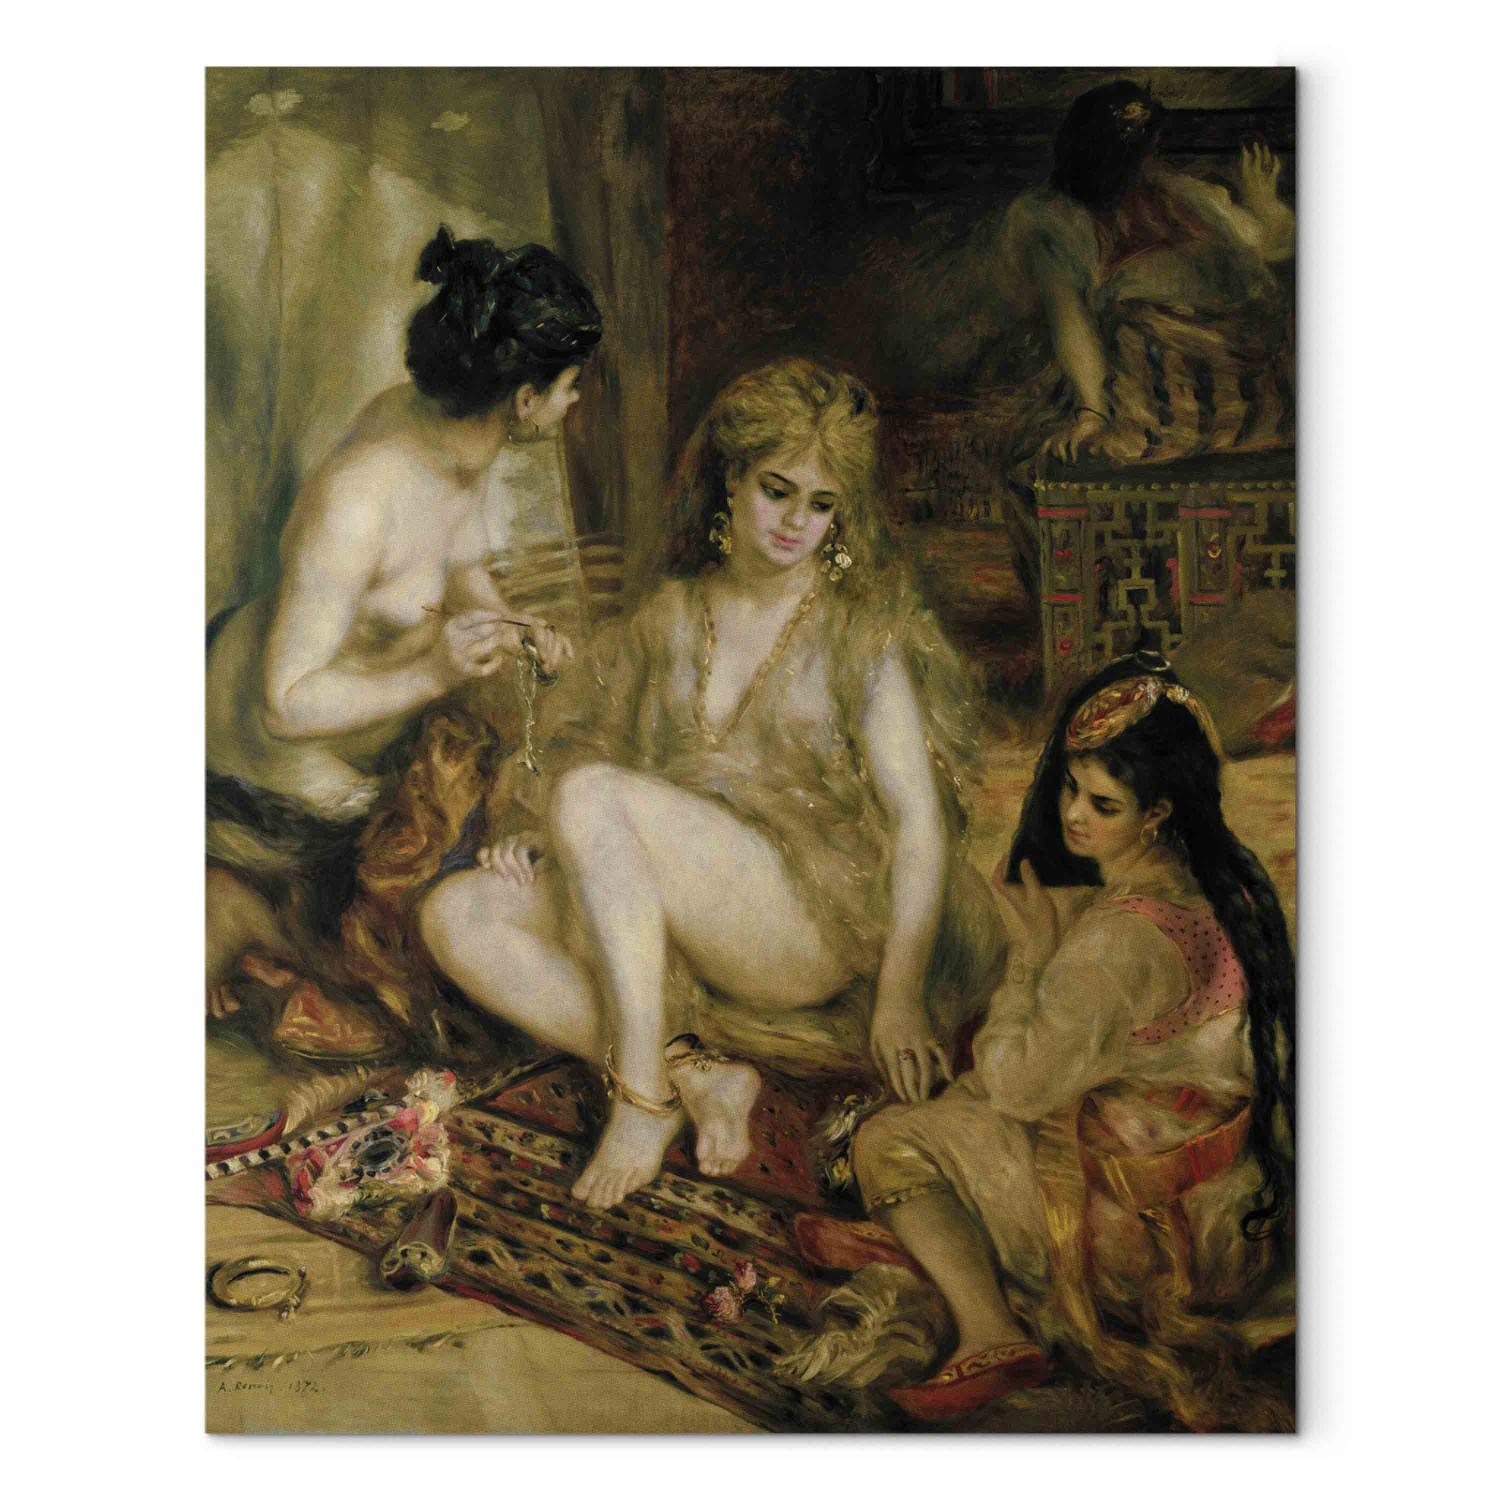 Reproducción Interior of a Harem in Montmartre, Parisian women dressed as Algerians